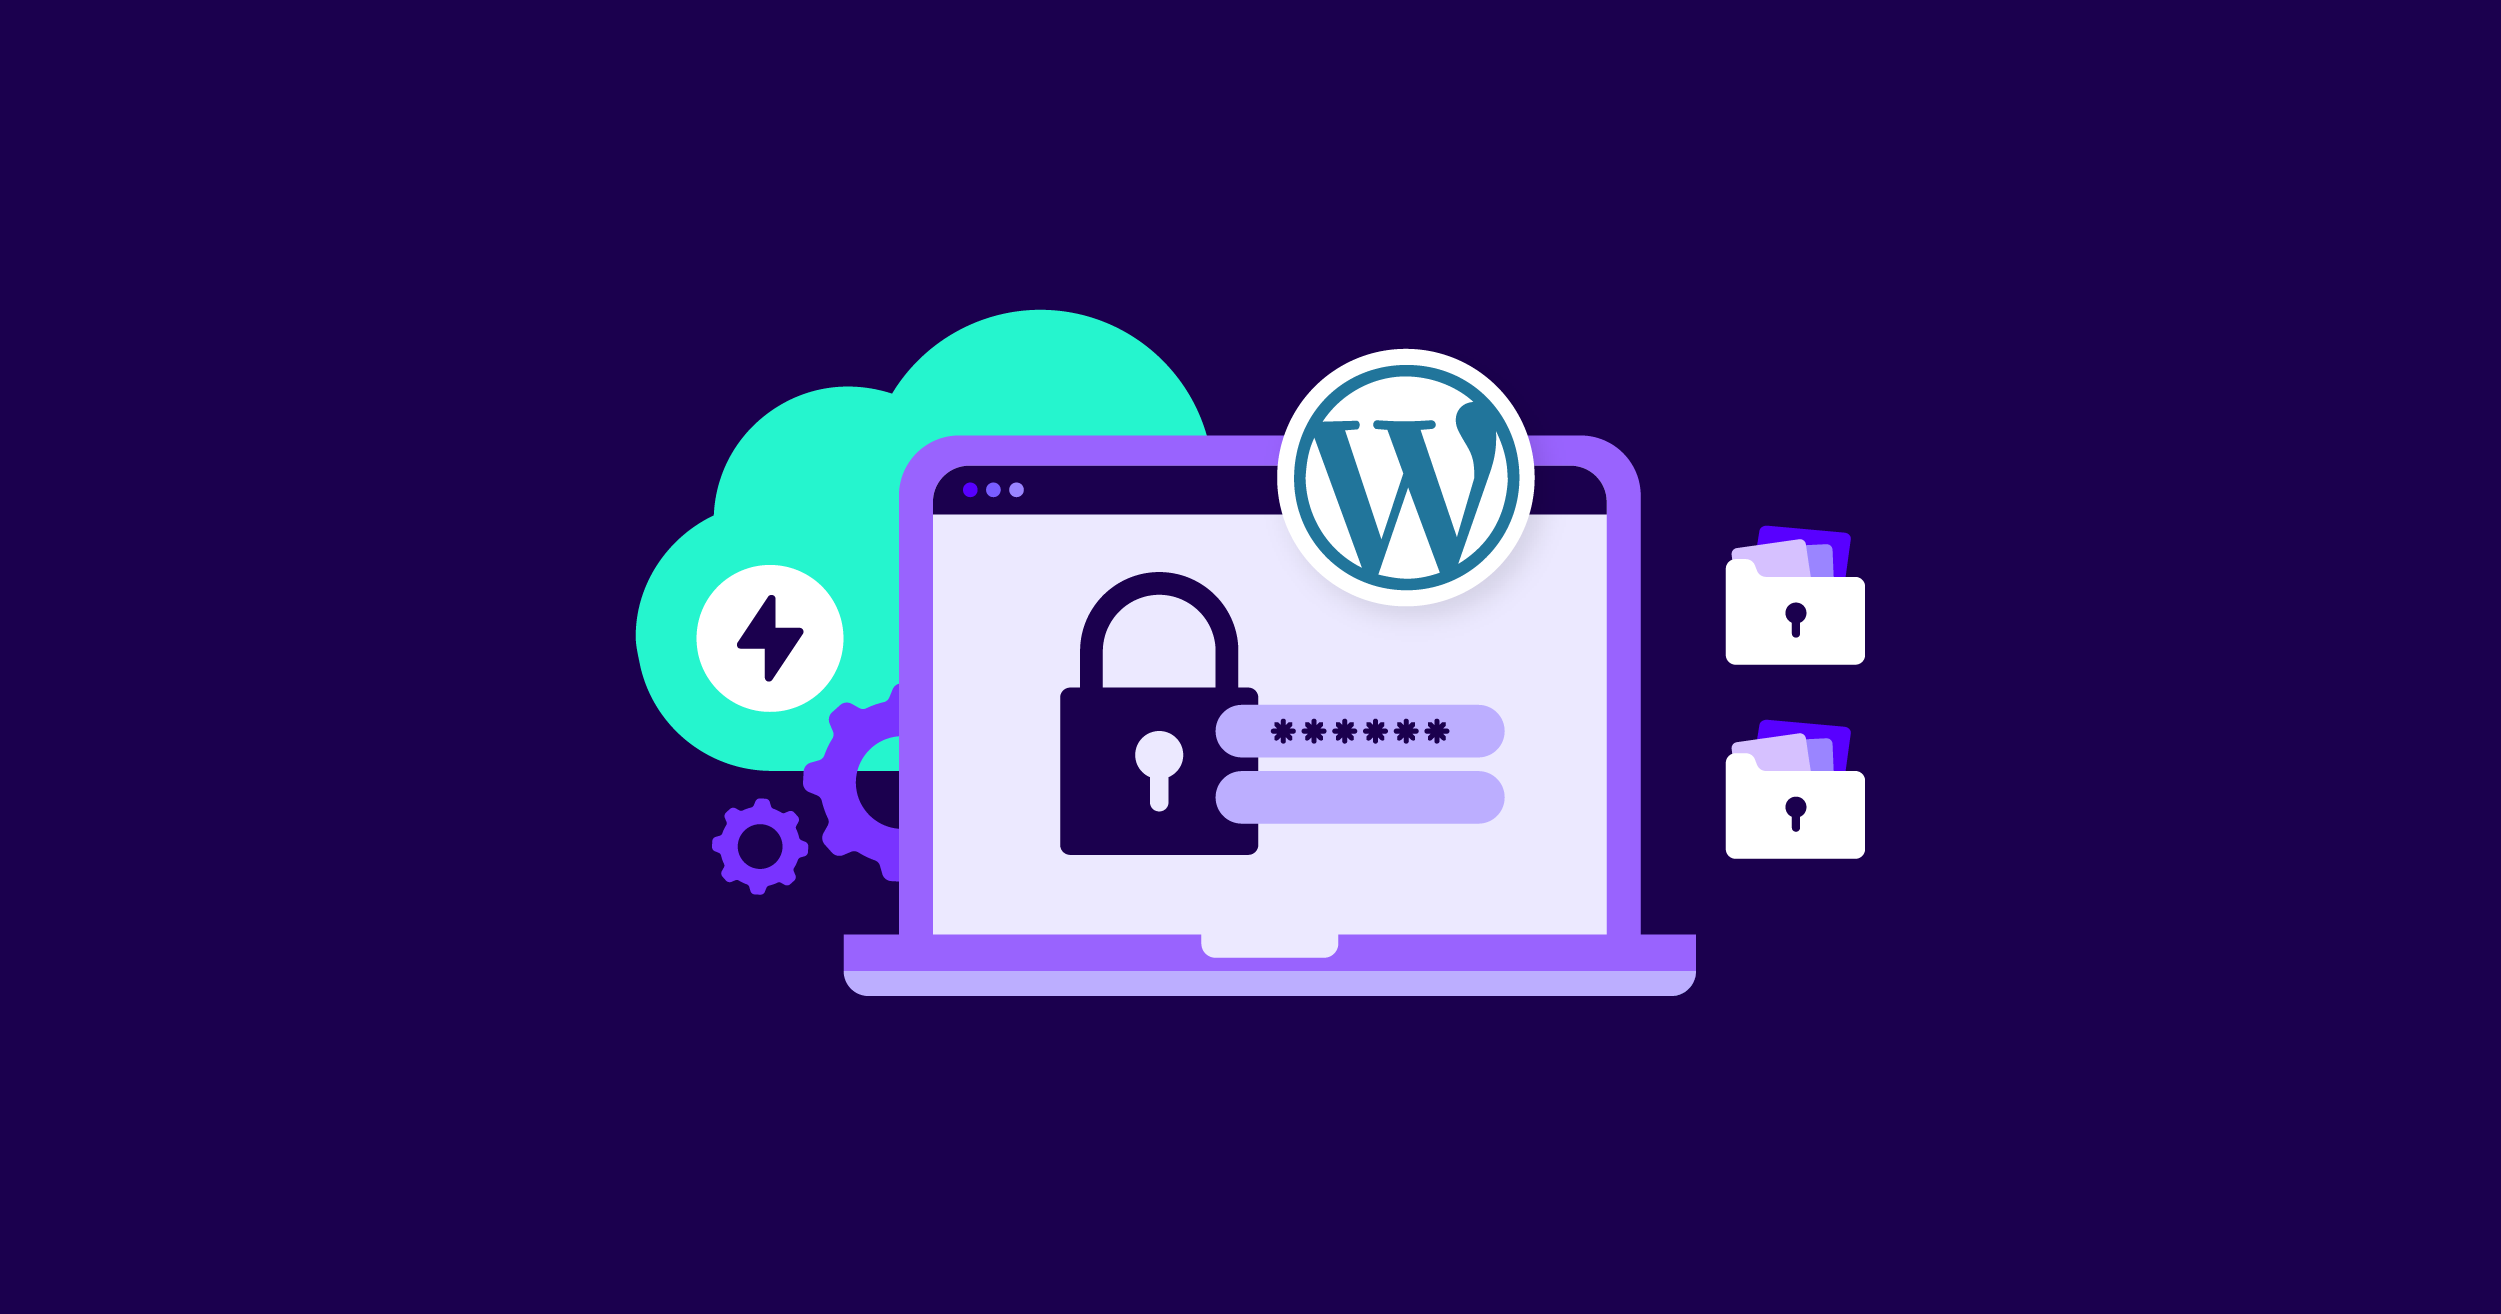 Wordpress security